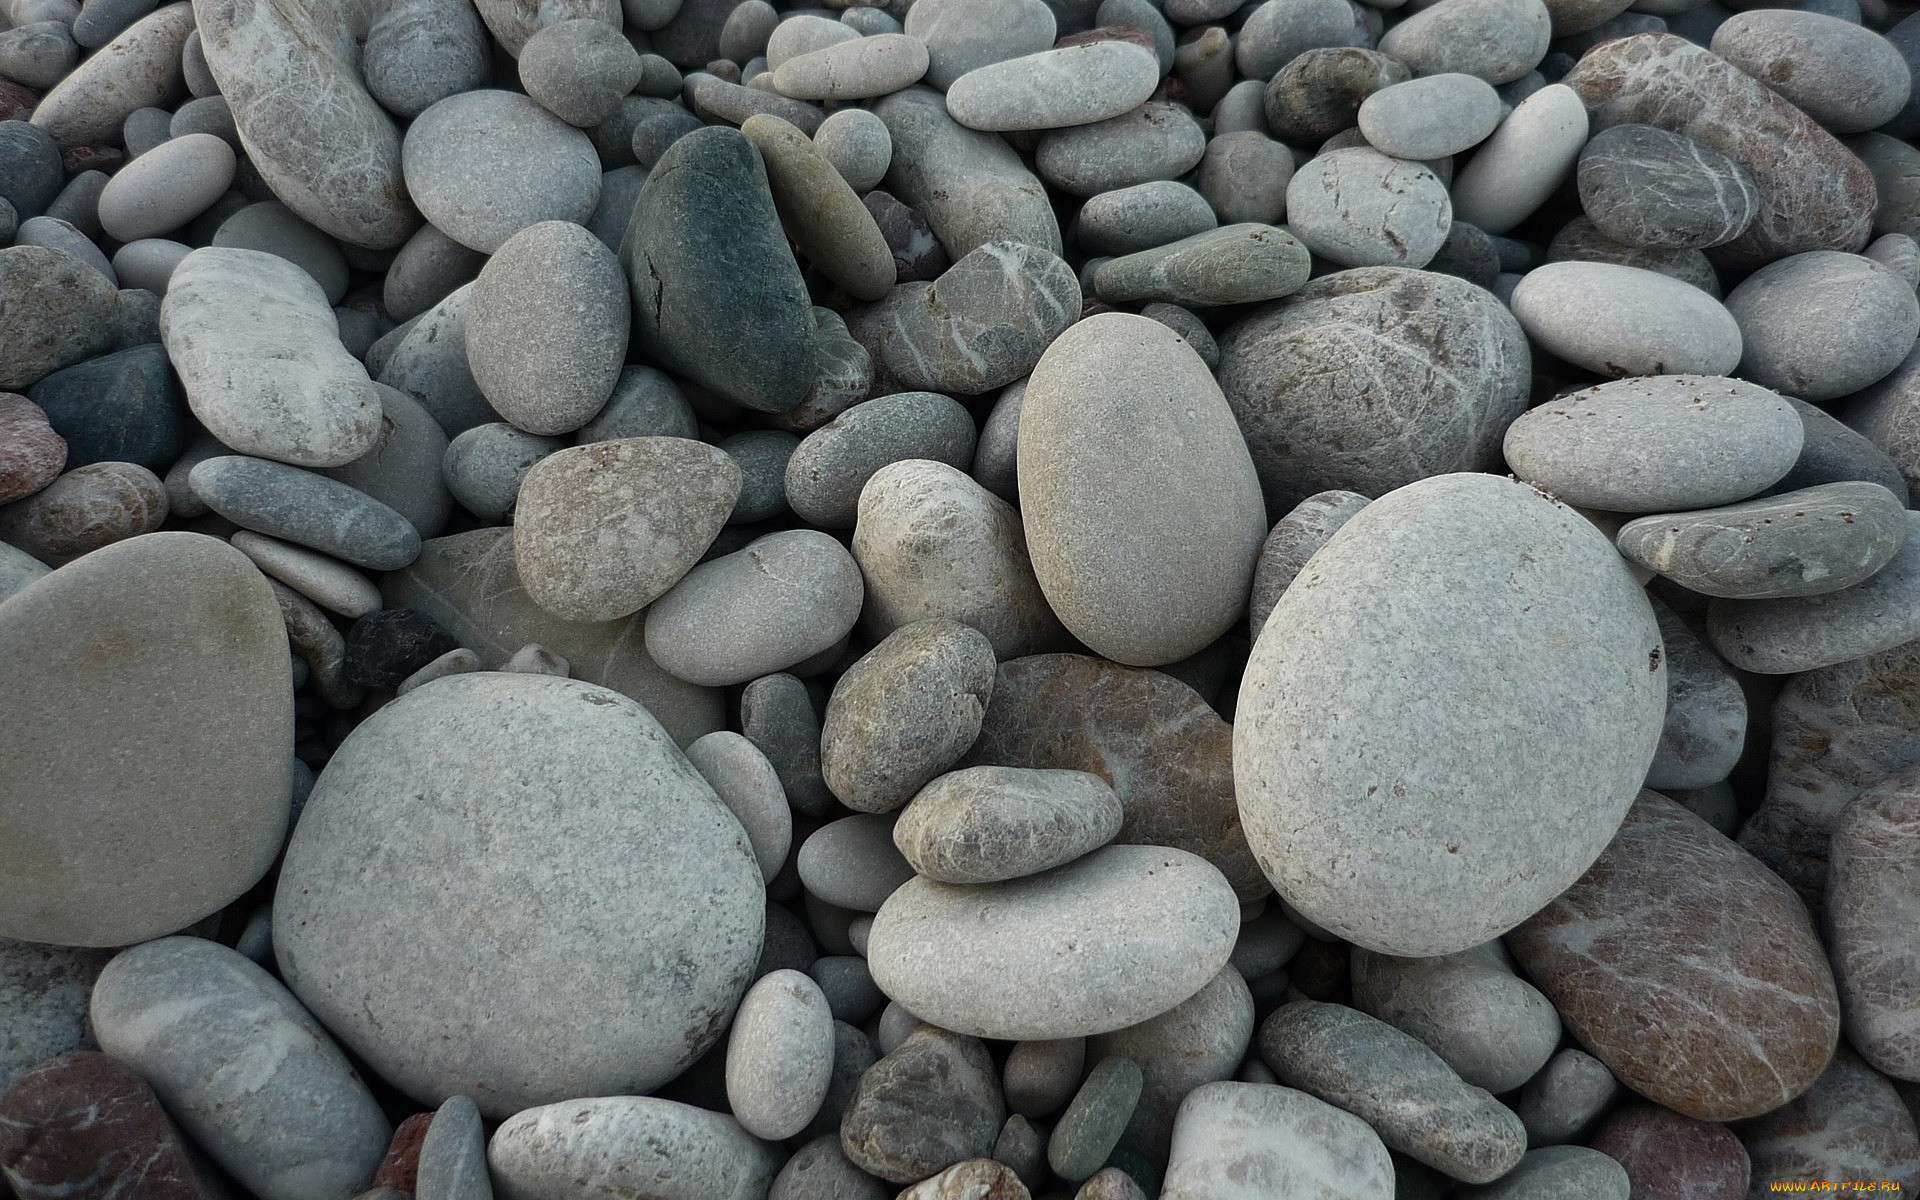 Their stones. Красивые камушки. Камень галька. Морская галька. Крупная галька.